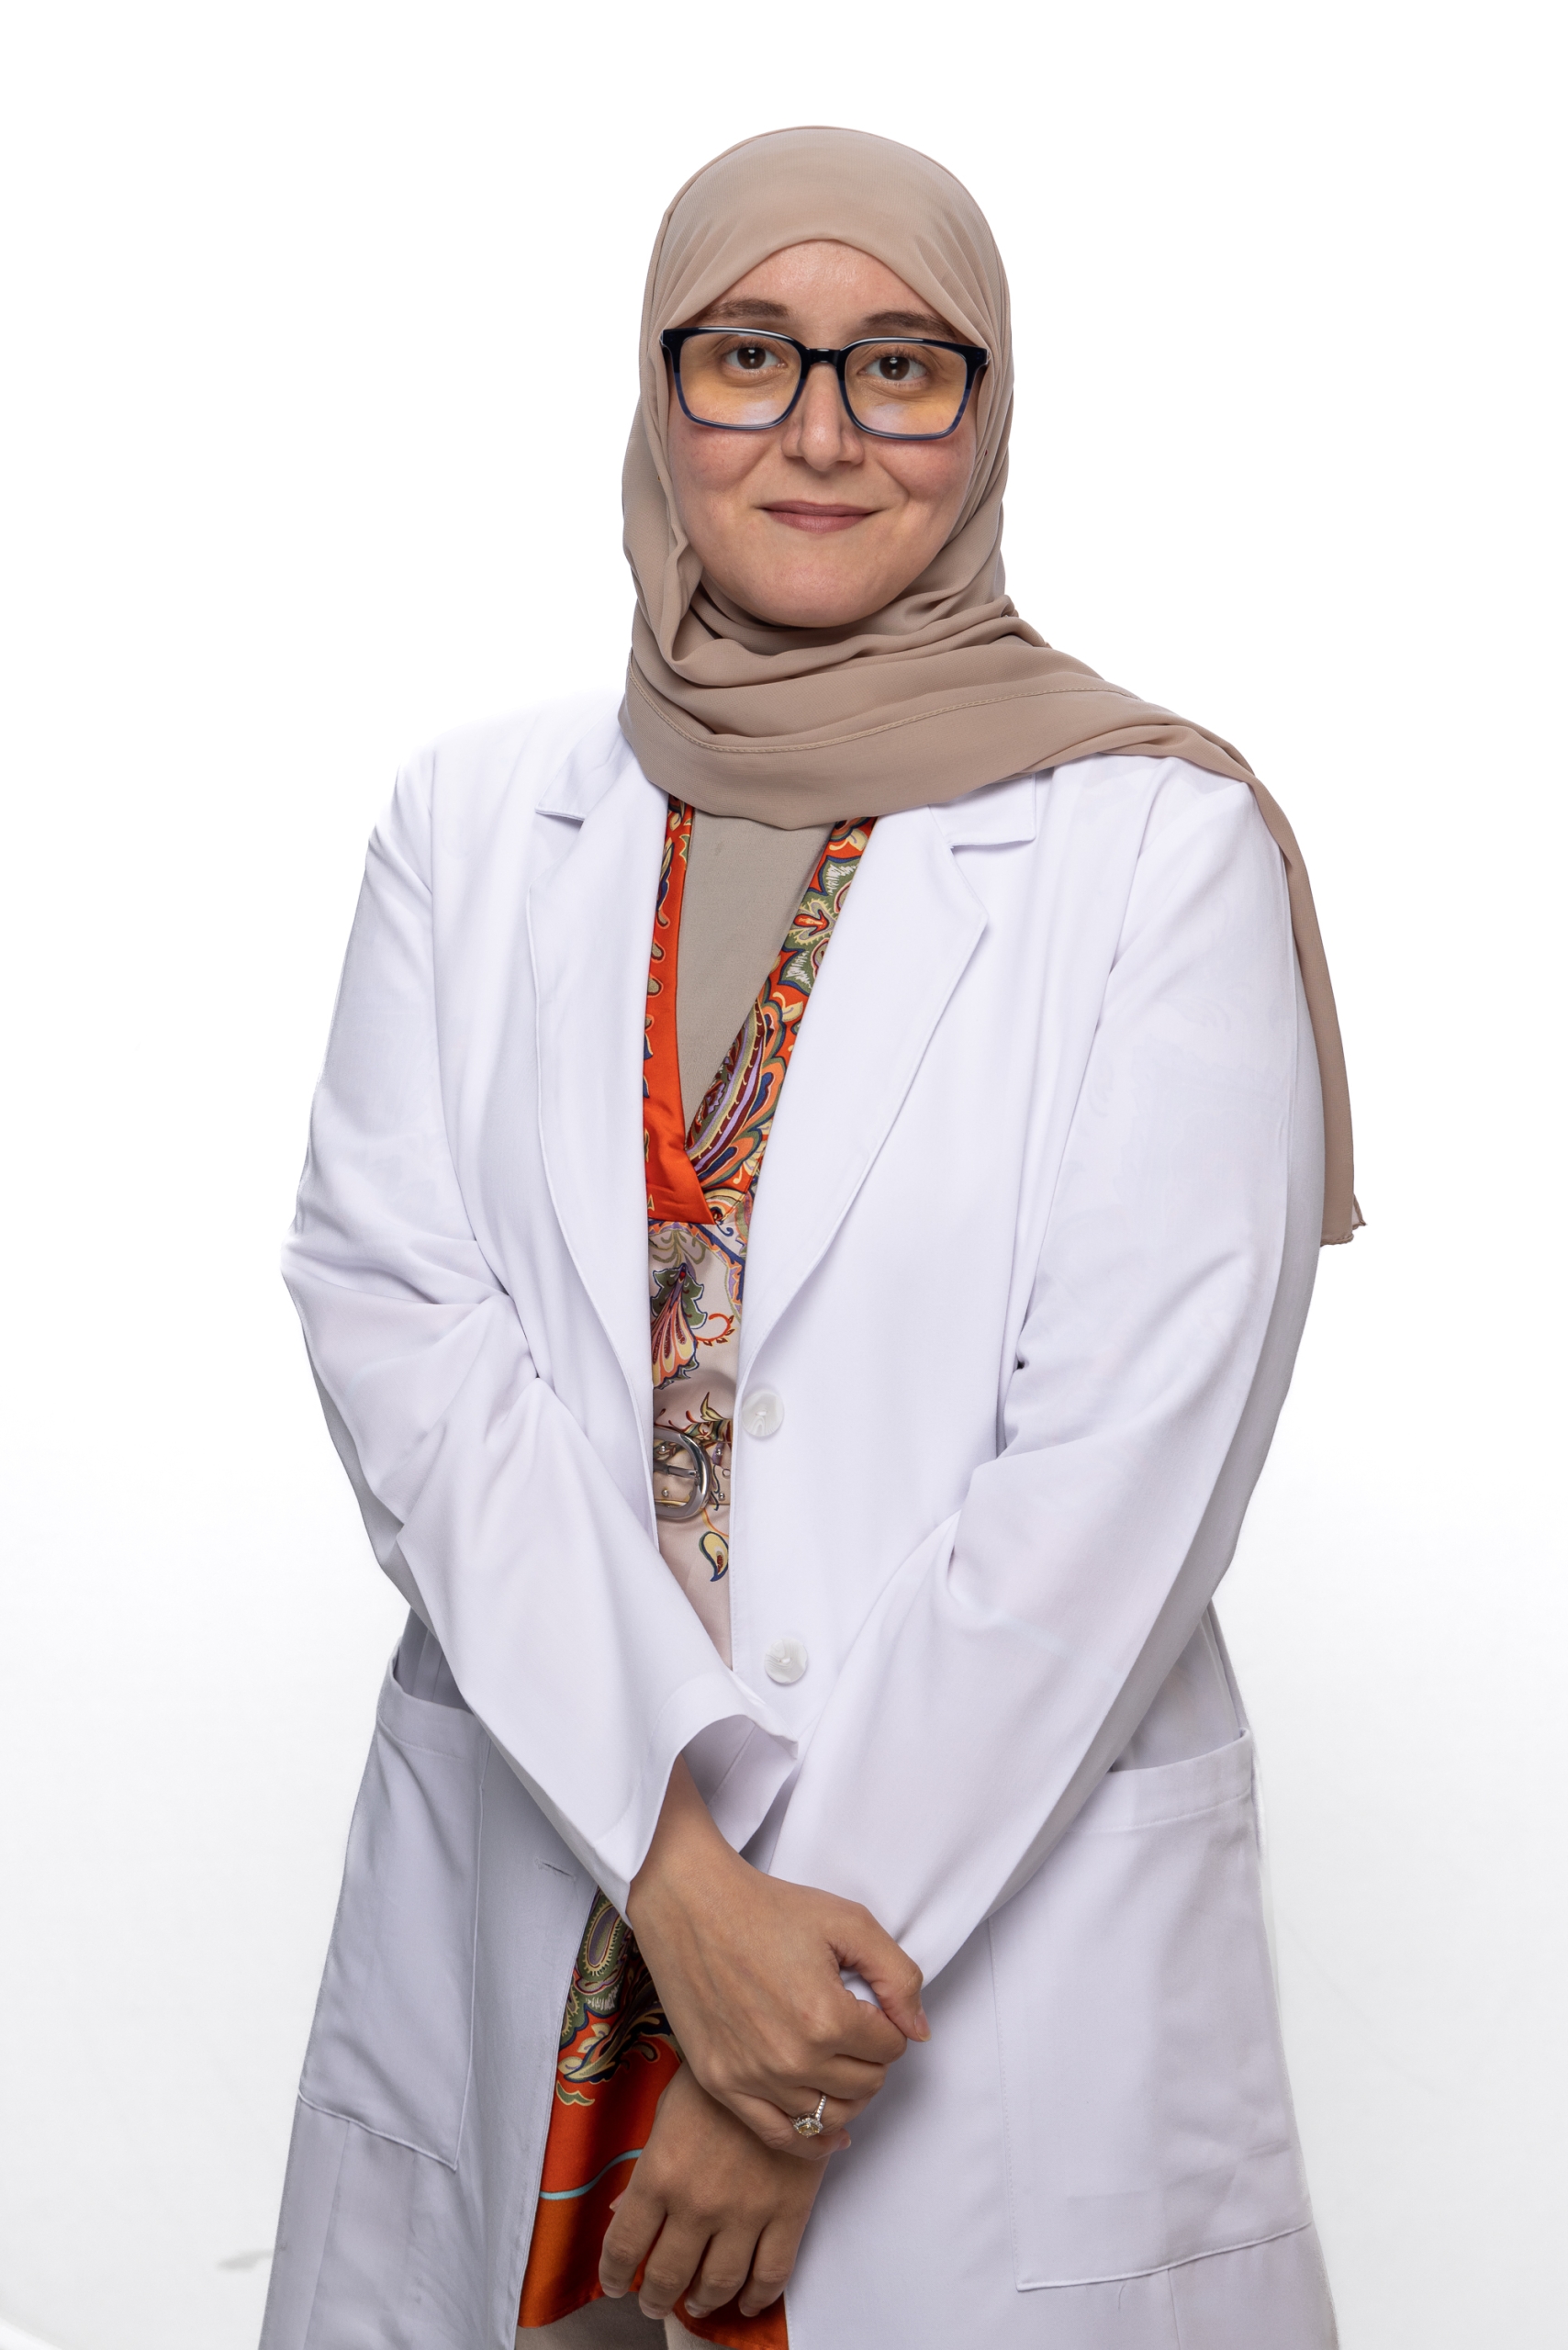 Dr. Lara Sulaiman AbuMuaileq